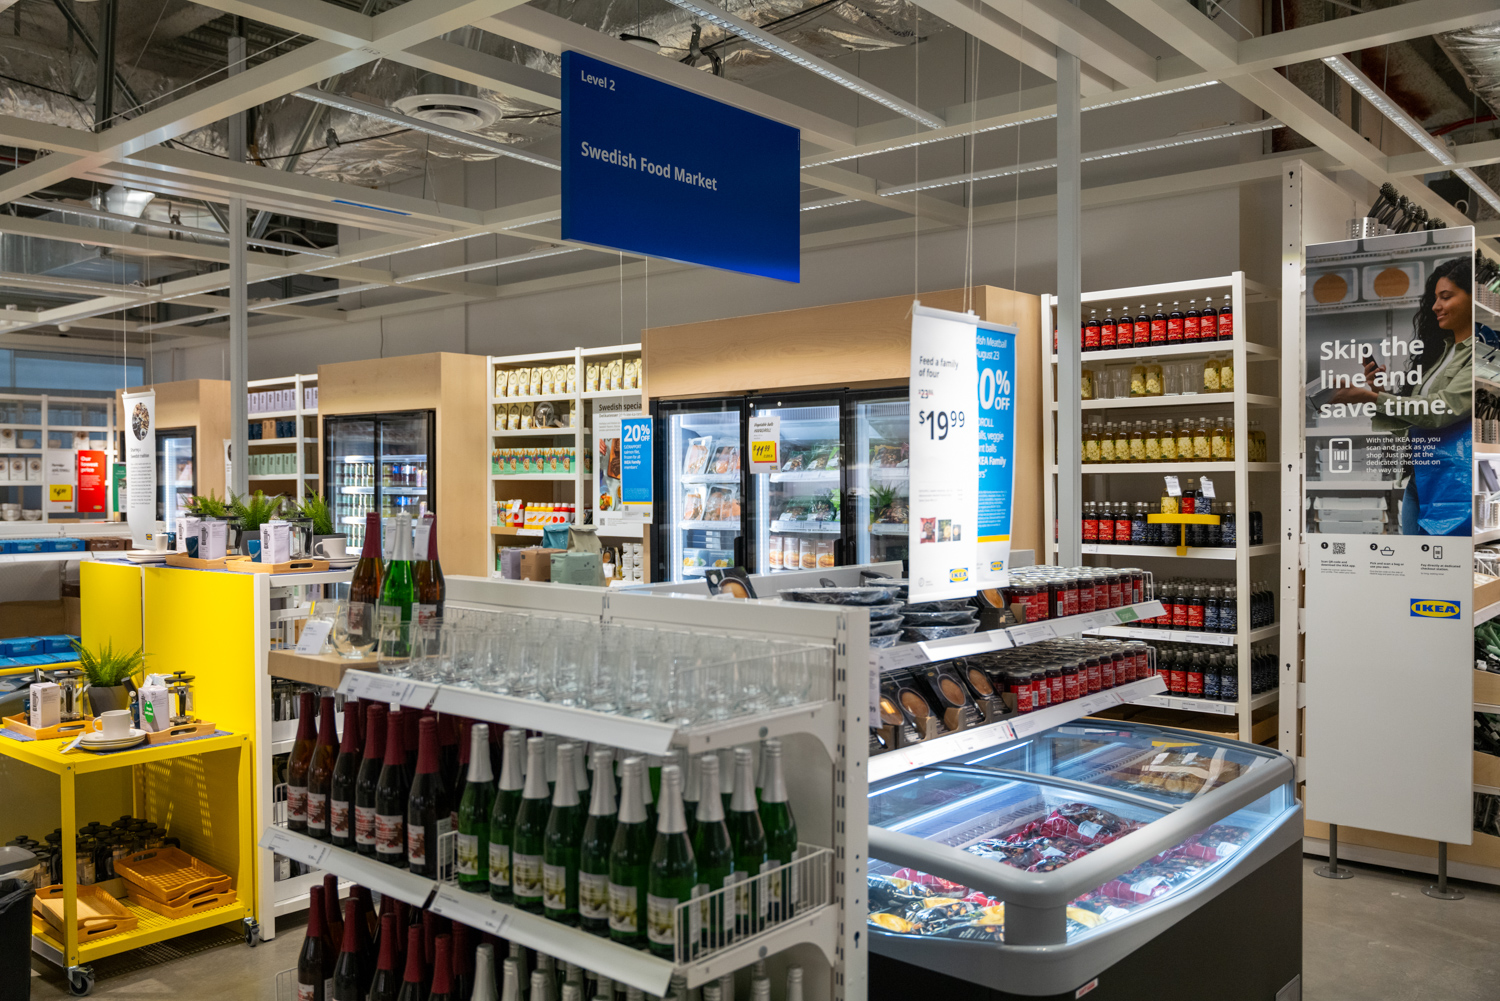 Swedish Food Market, image by Brandon Lavoie courtesy IKEA